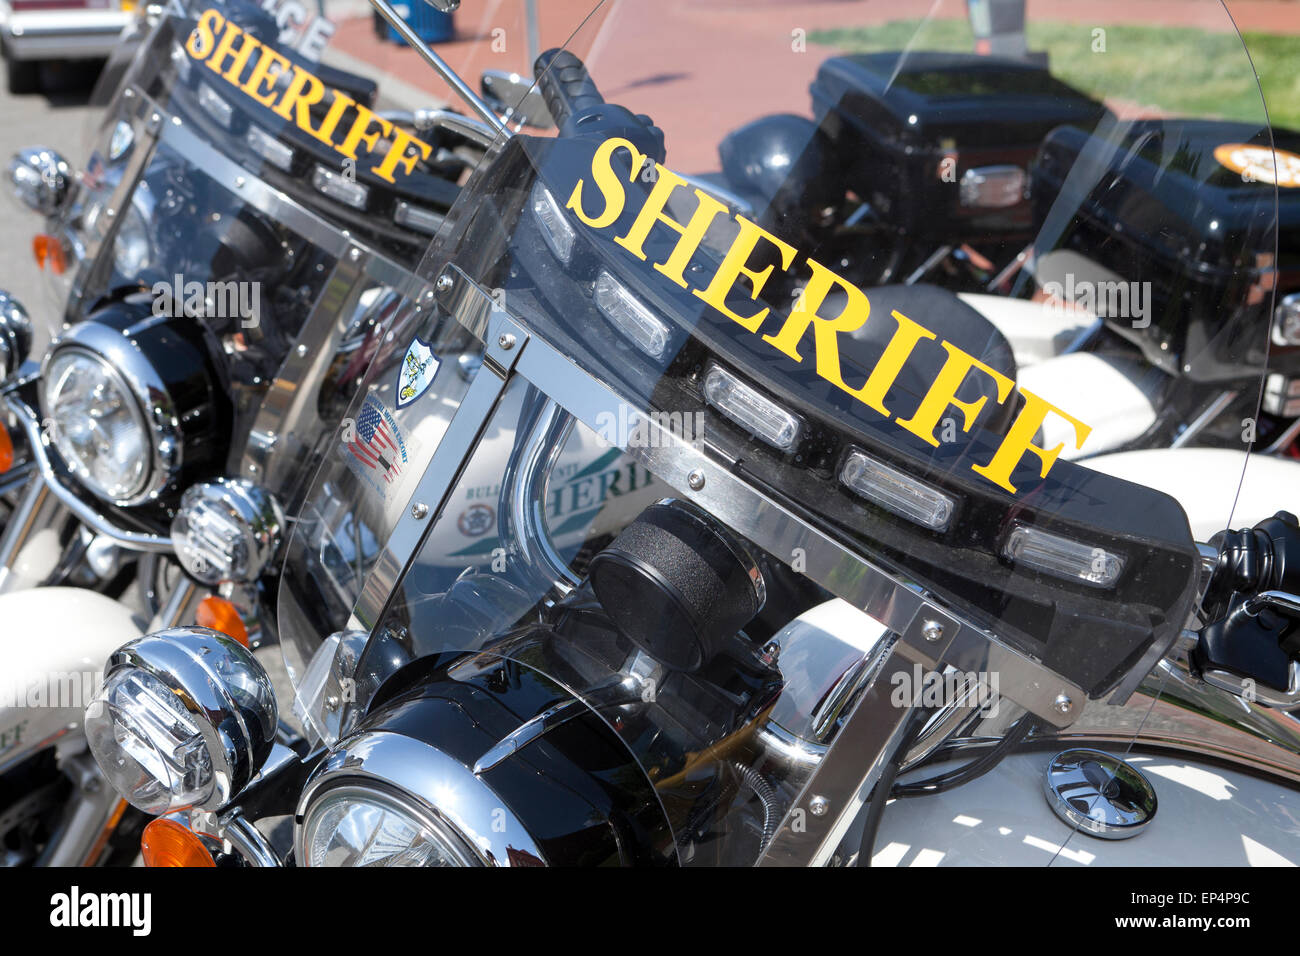 County Sheriff motorcycle - USA Stock Photo